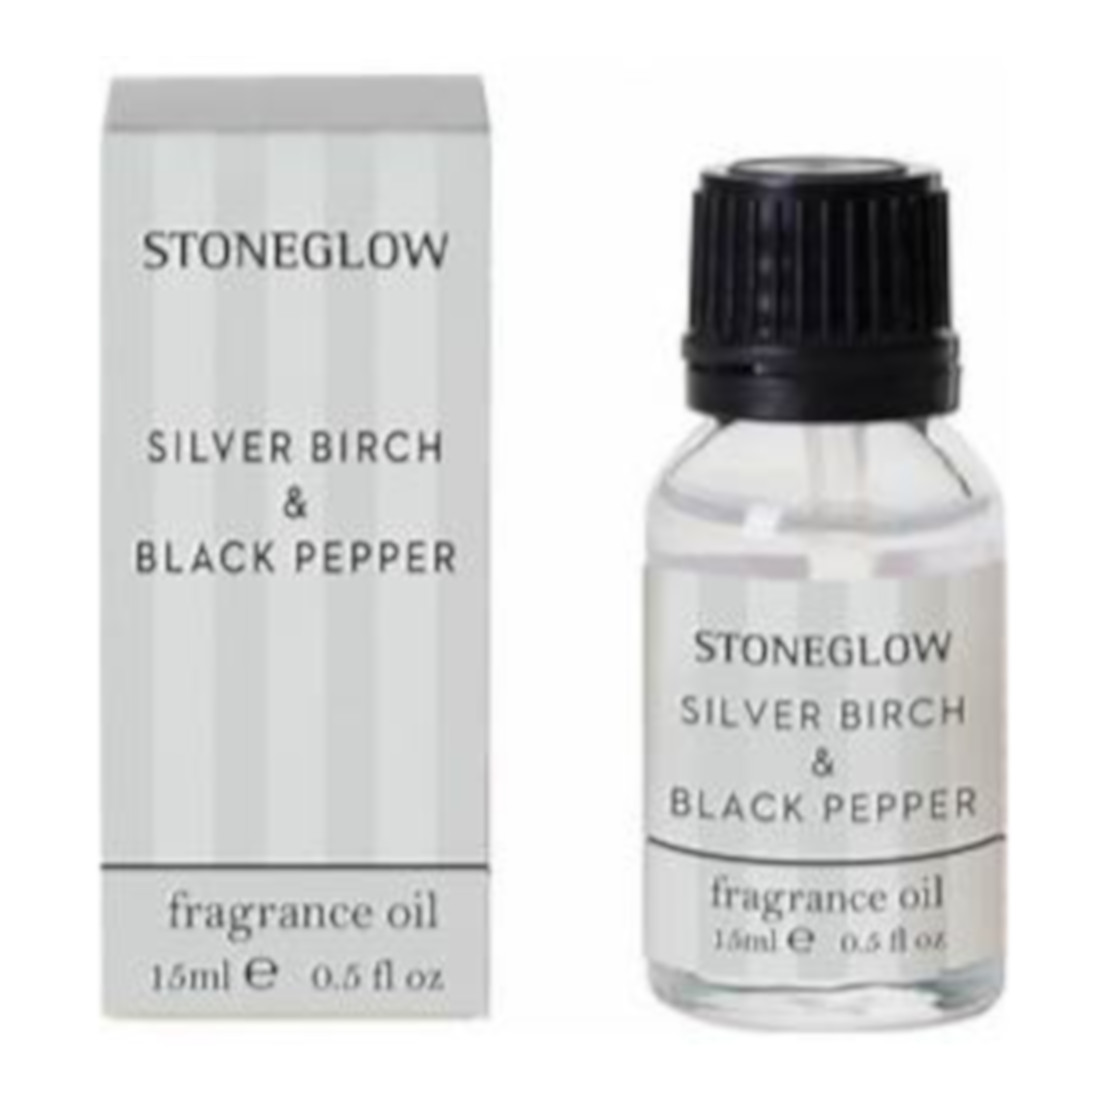 Stoneglow Silver Birch & Black Pepper Fragrance Oil 15ml